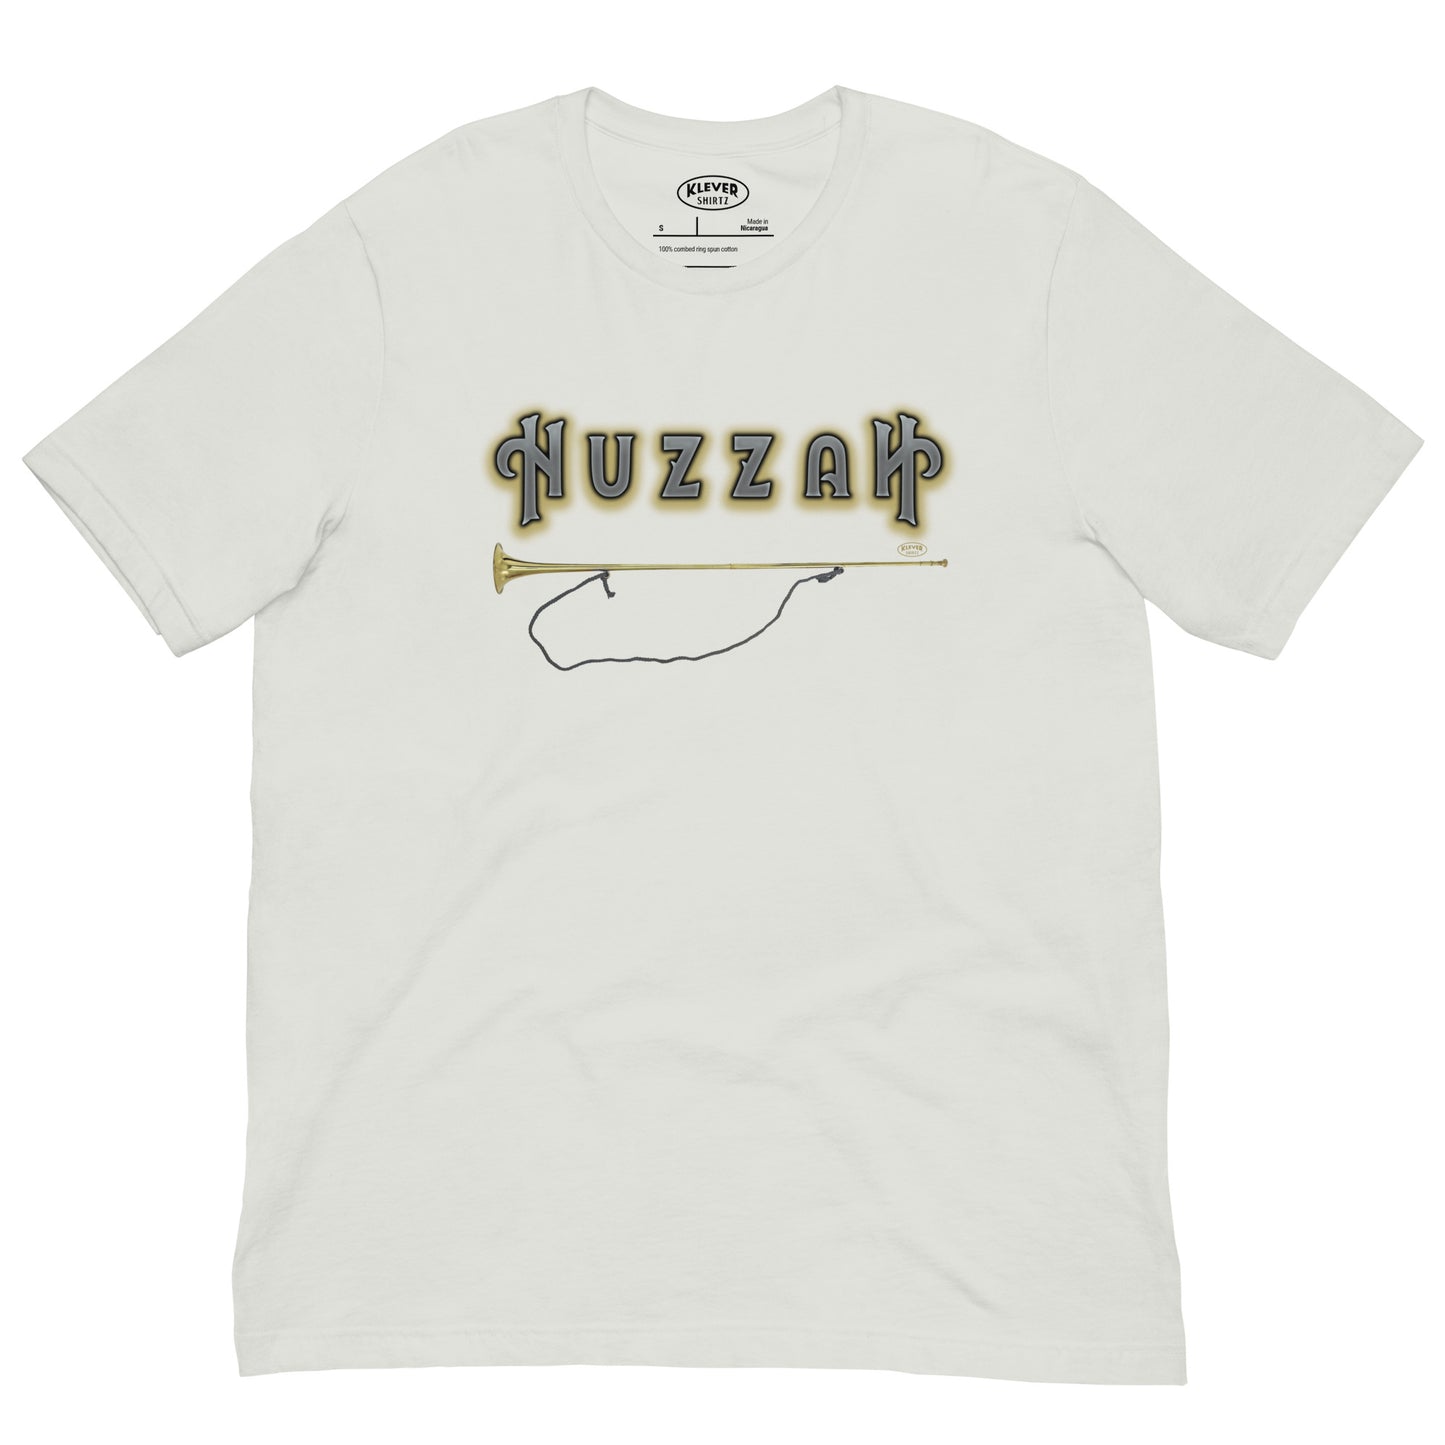 Huzzah Tee - Klever Shirtz